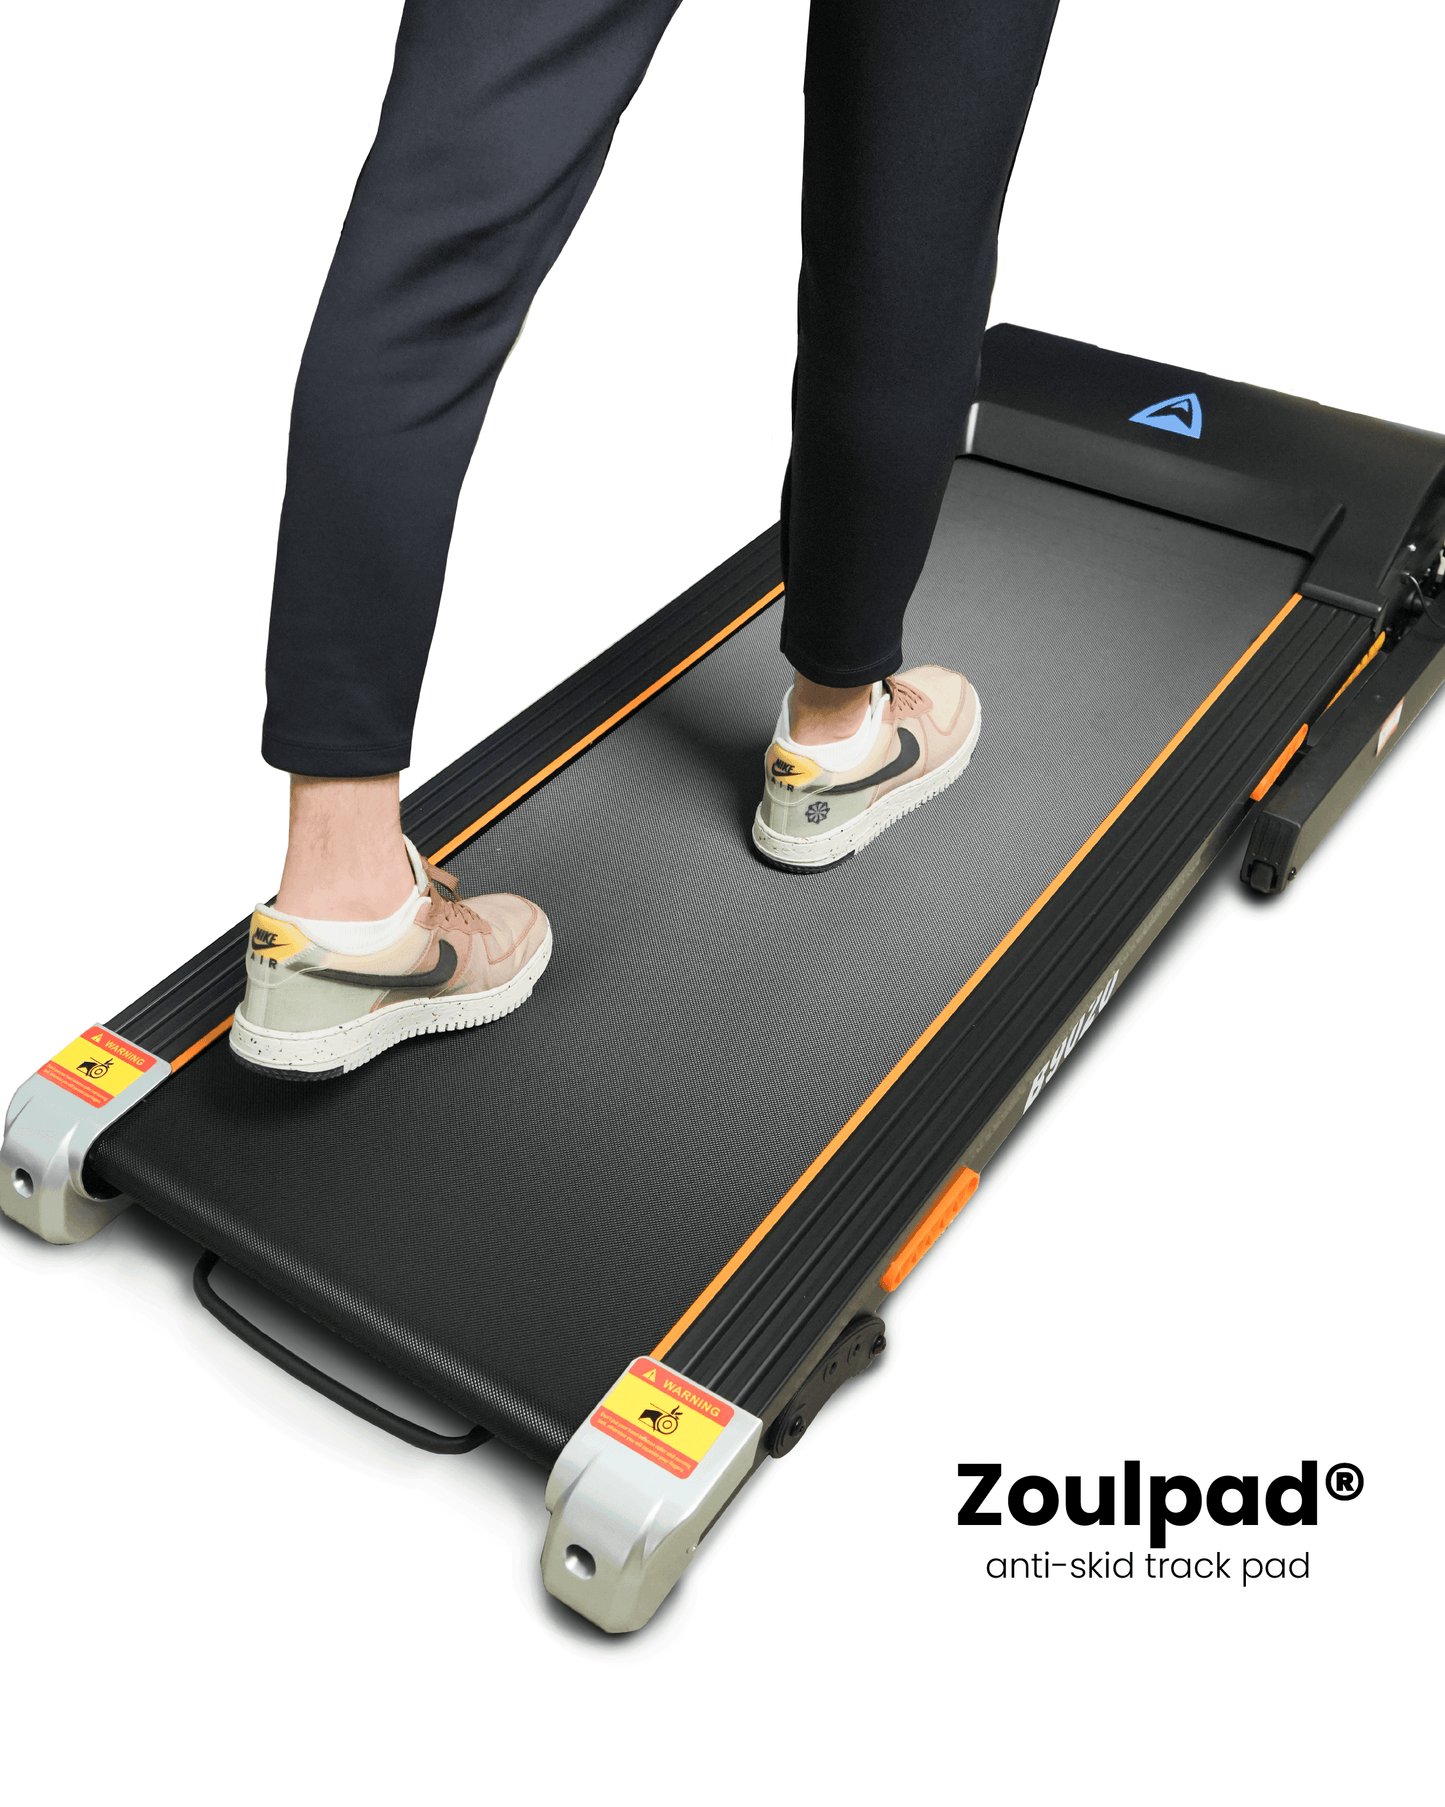 Digital Home Treadmill B-9020(2HP/3HP Peak) - zoulfitness